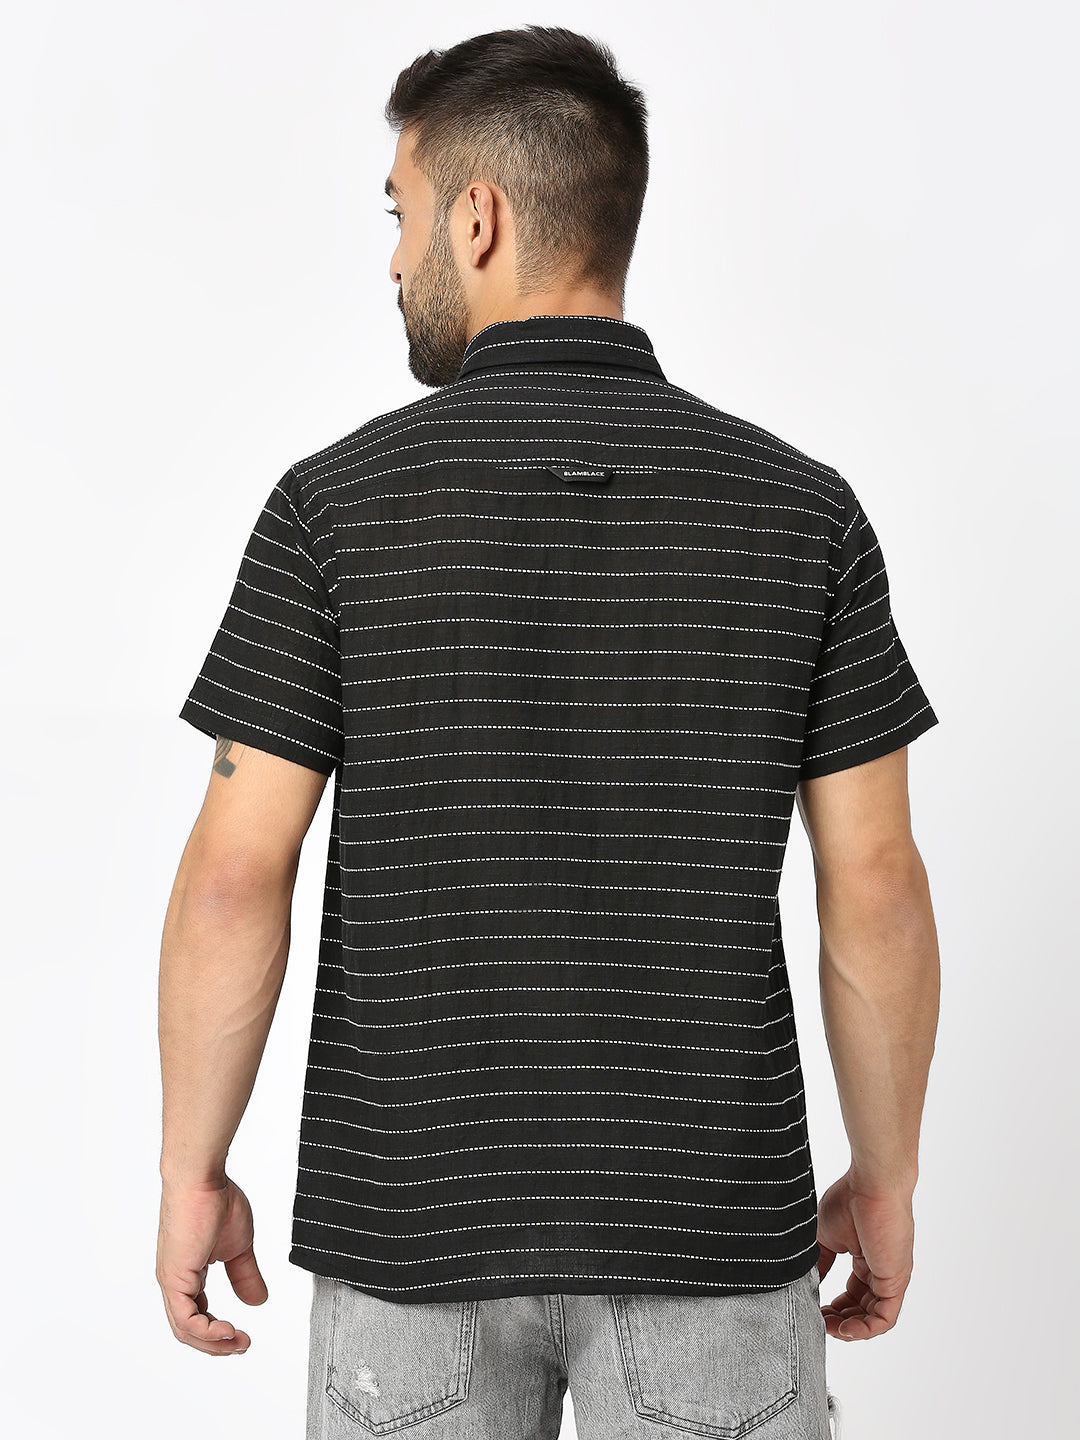 Embroidered Half Sleeves Regular fit Spread Collar Shirt